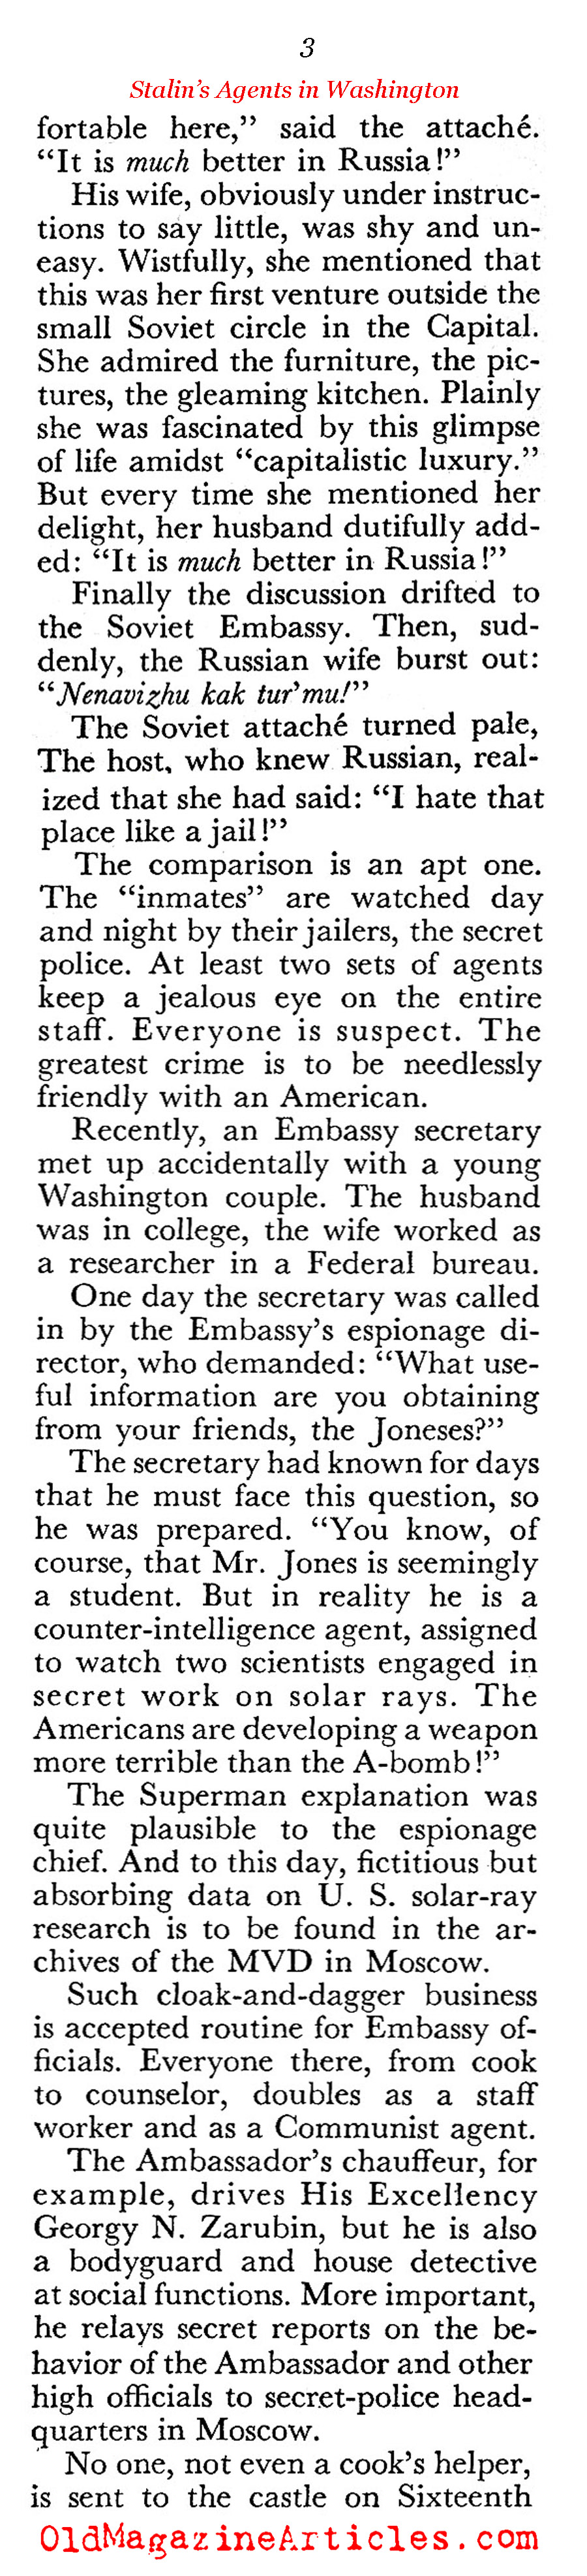 The Red Spies in Washington (Coronet Magazine, 1952)